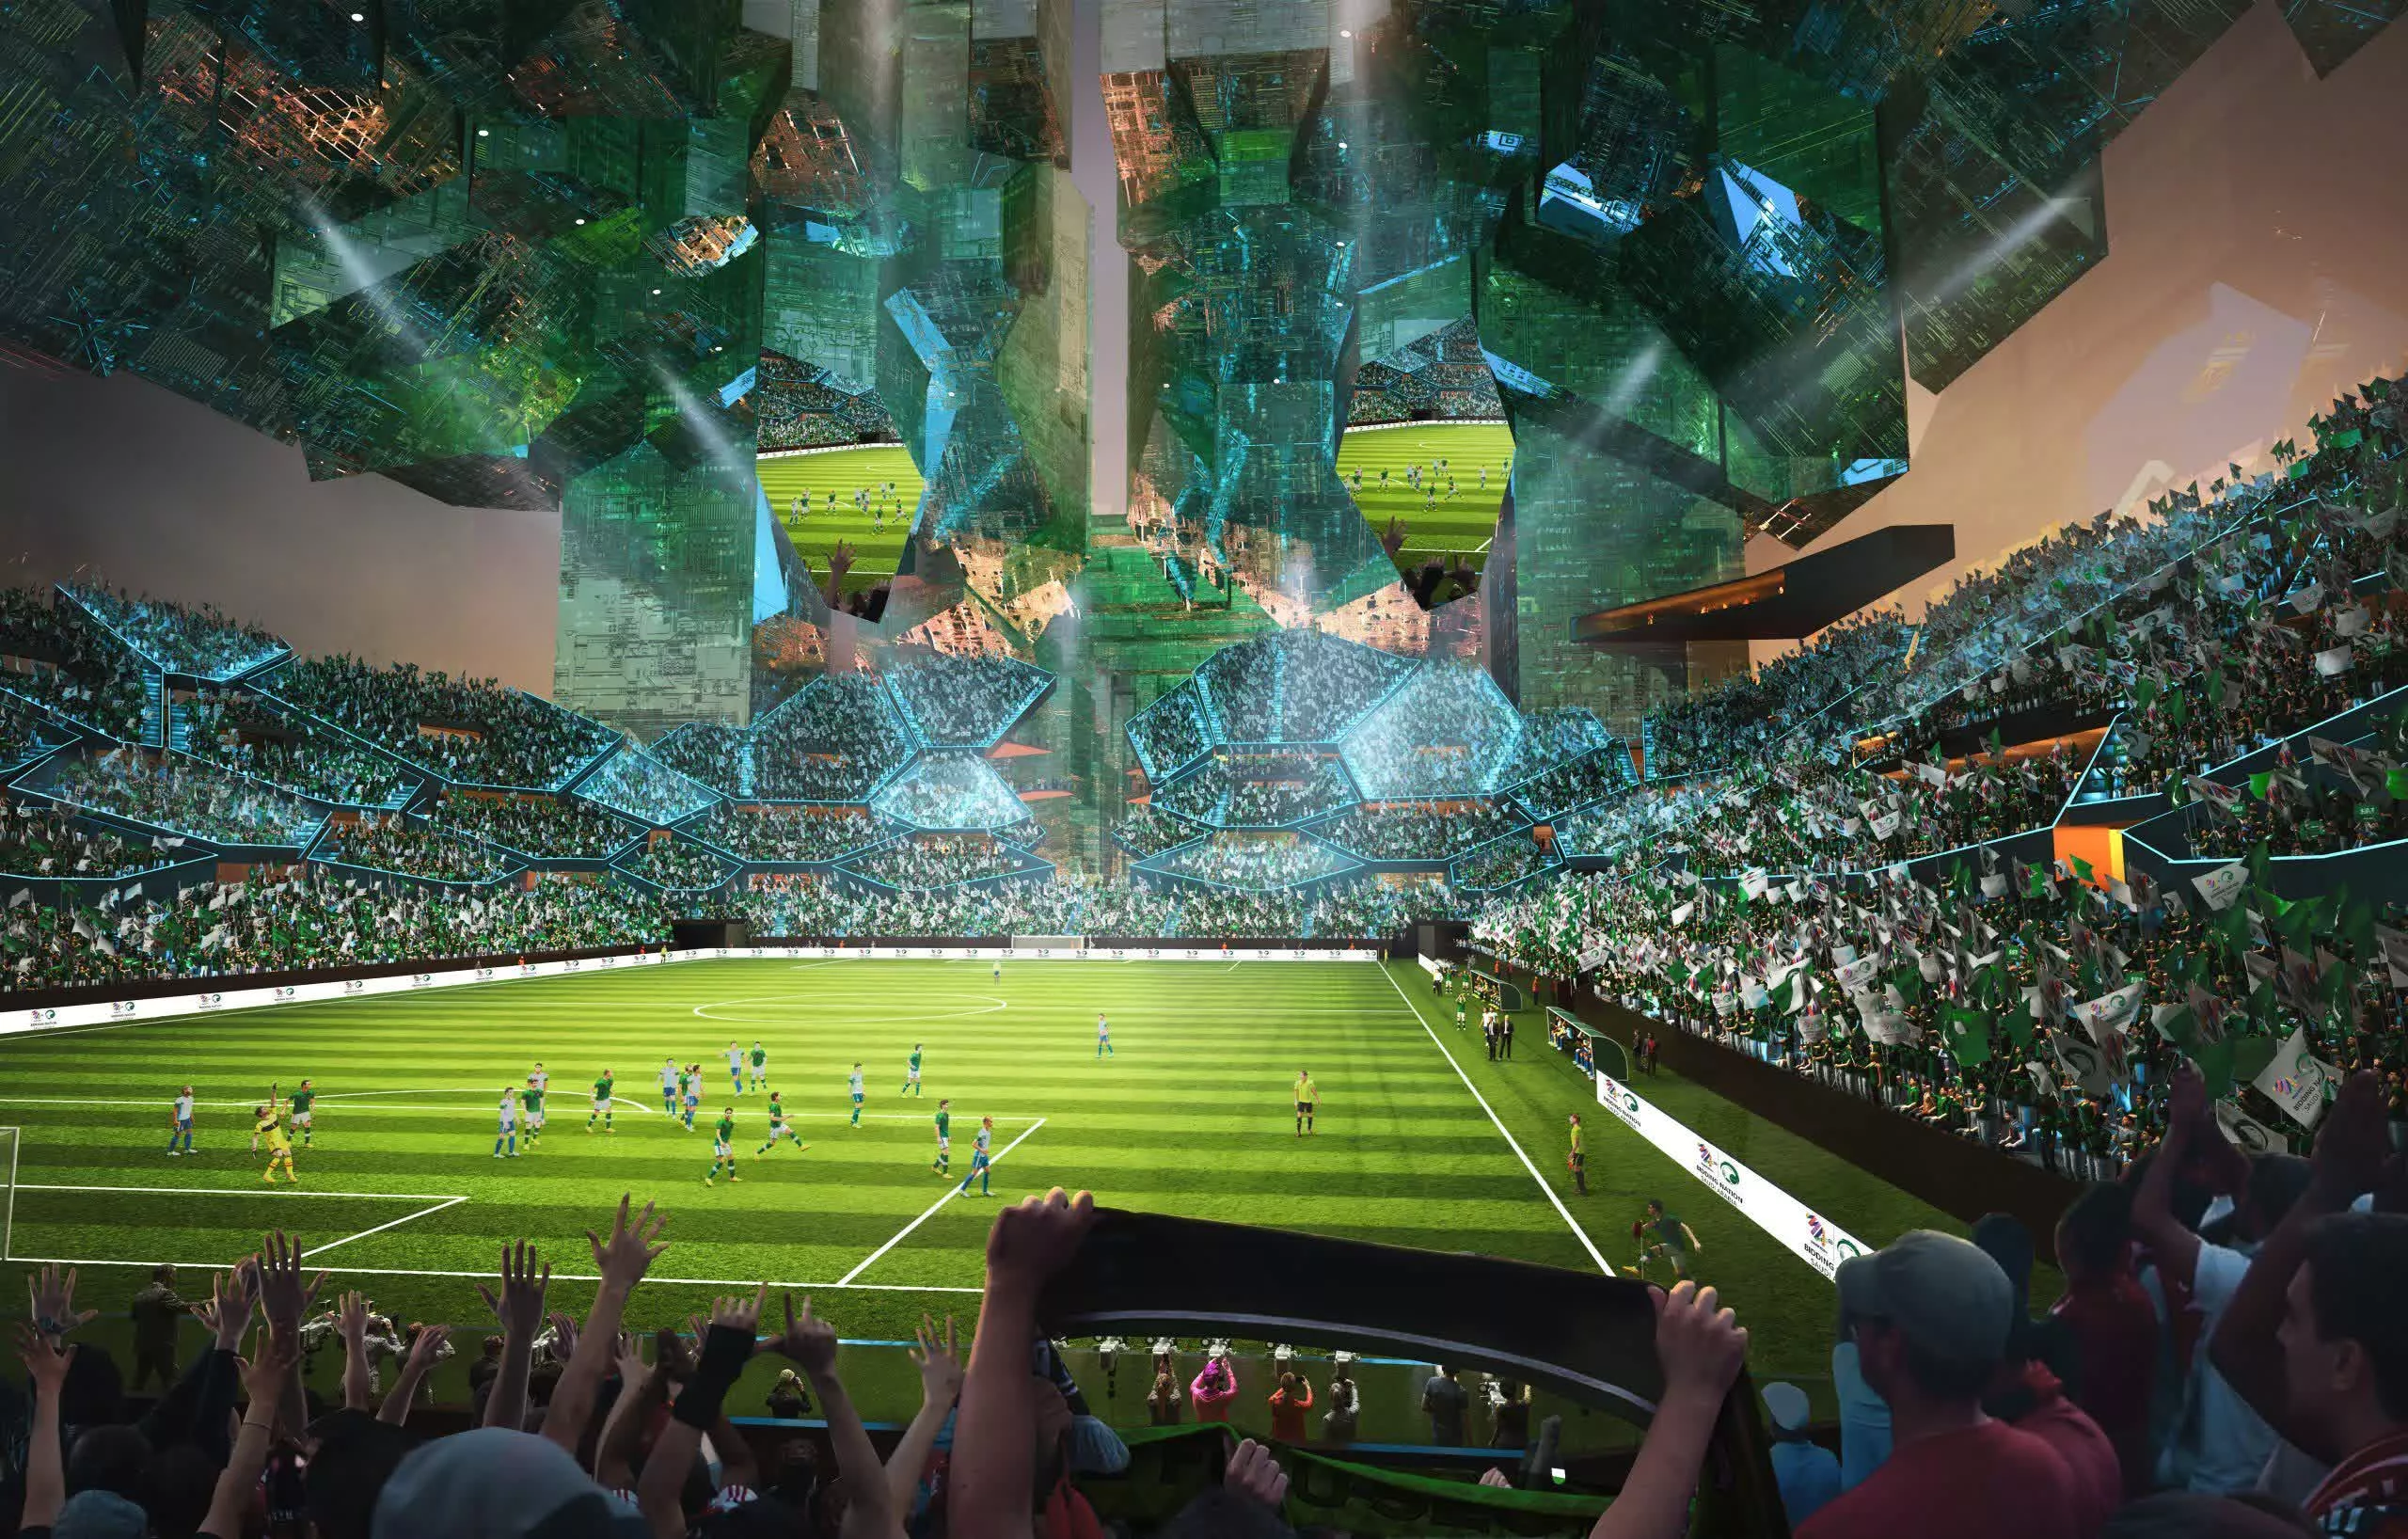 Cyberpunk, anyone? Saudi Arabia unveils futuristic sporting arenas for 2034 FIFA World Cup